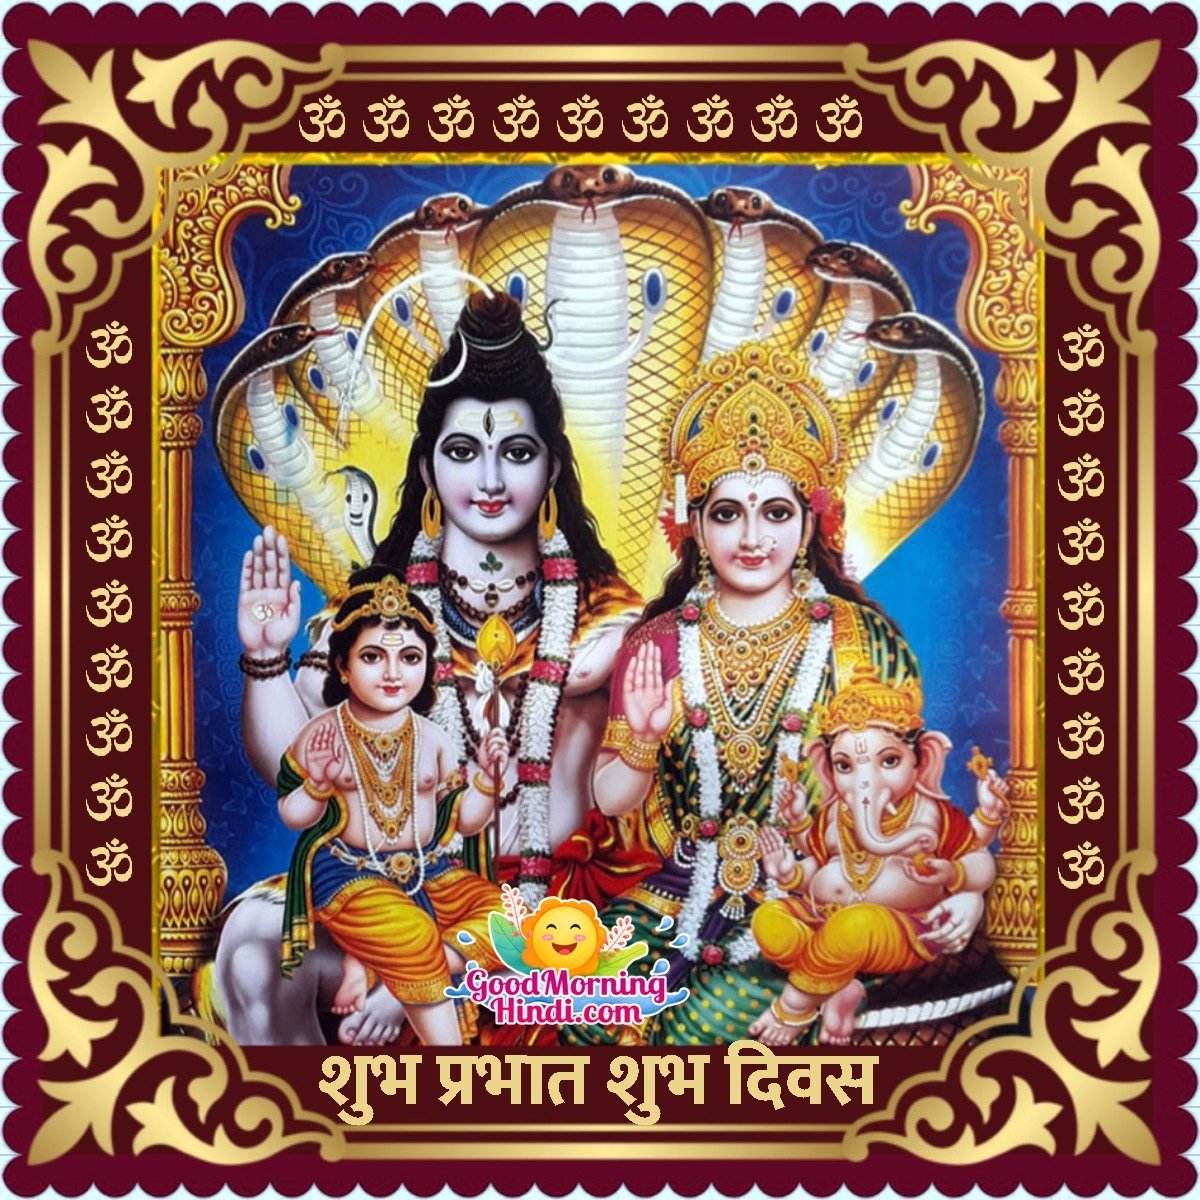 Good Morning Shiva Images In Hindi - Good Morning Wishes & Images ...